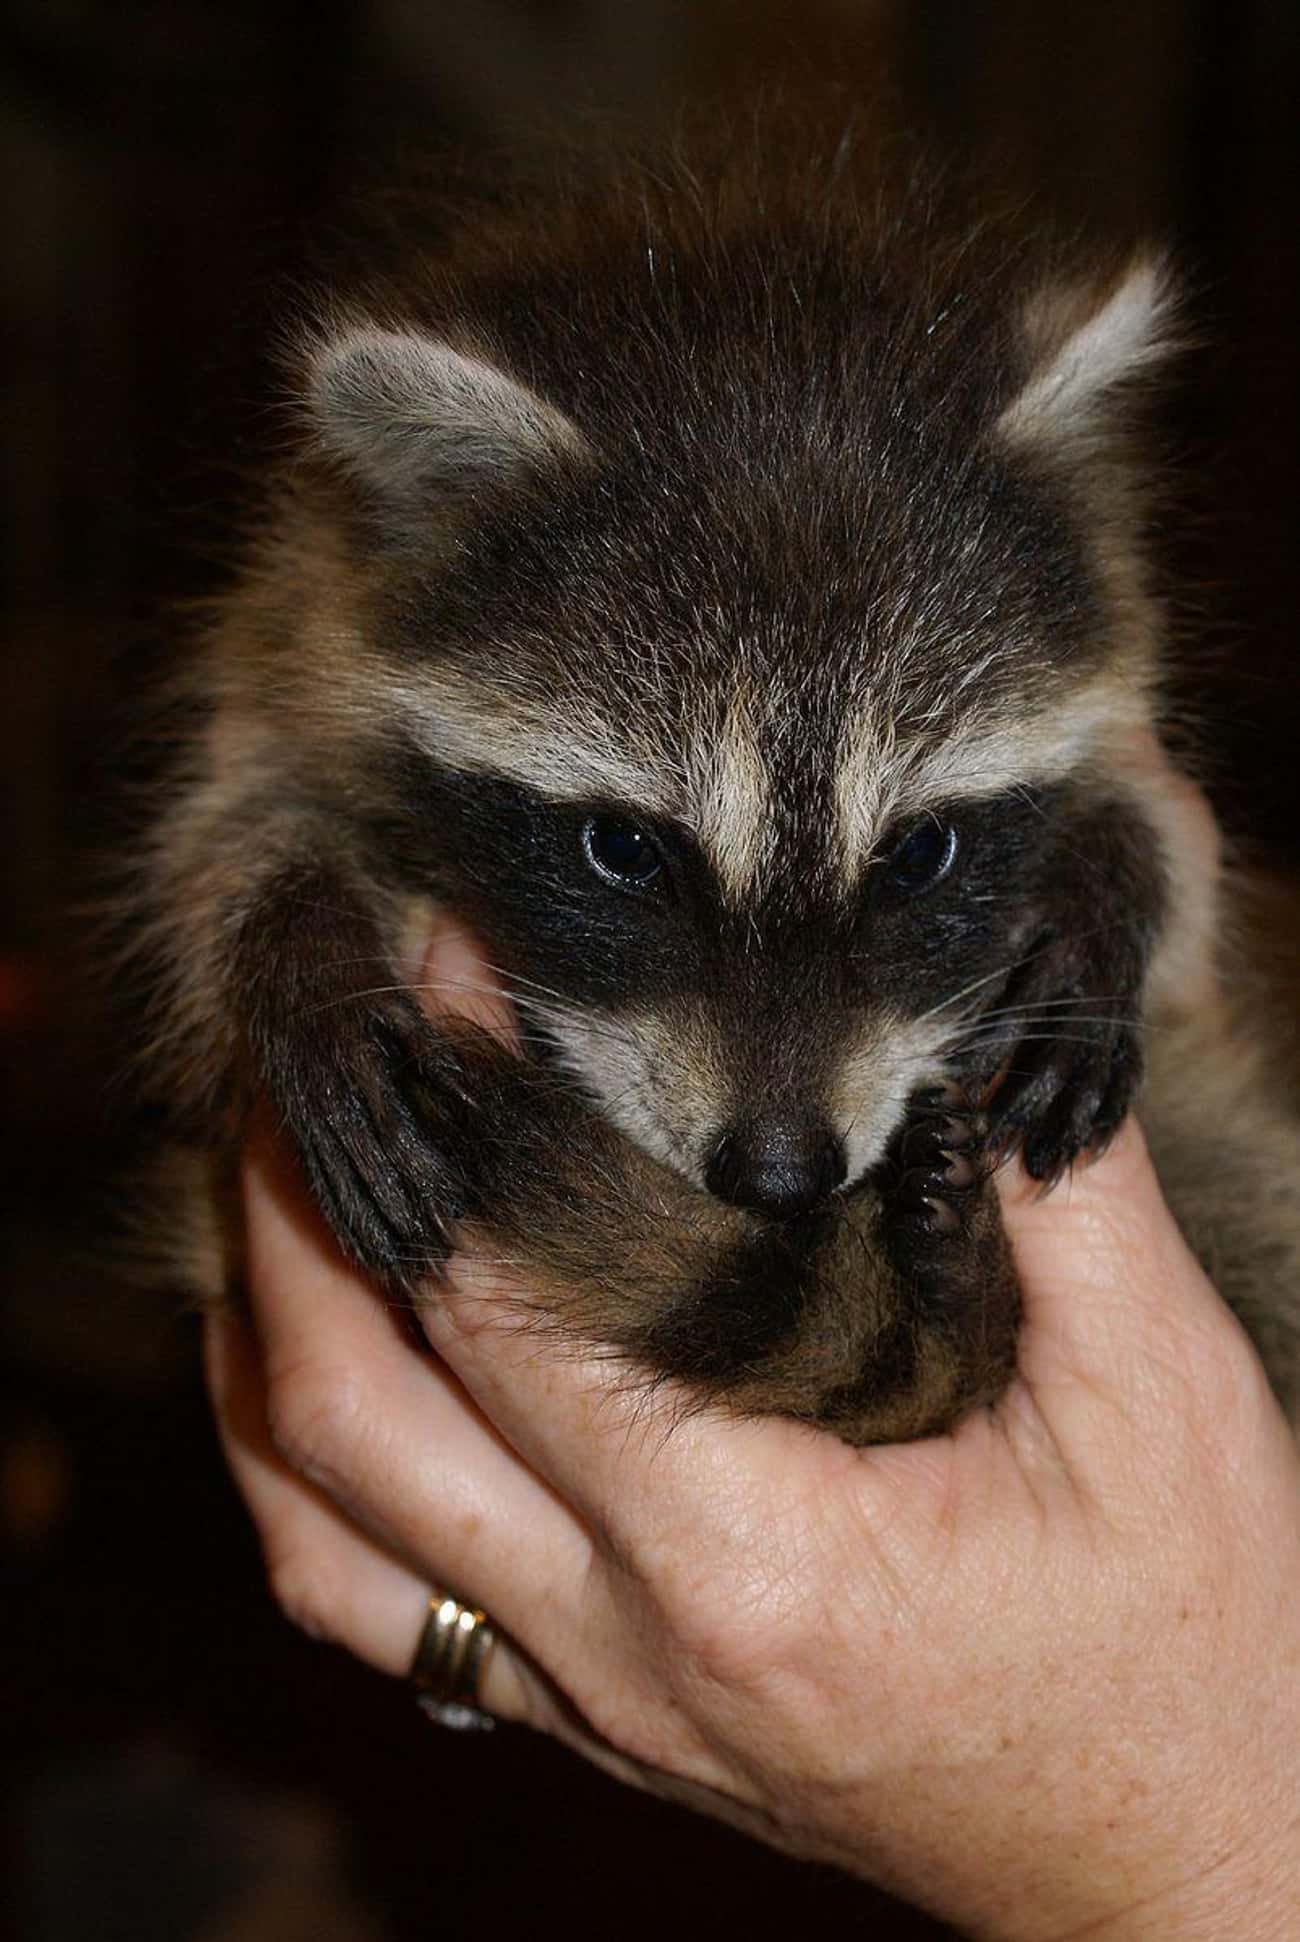 The World's Cutest Baby Raccoon